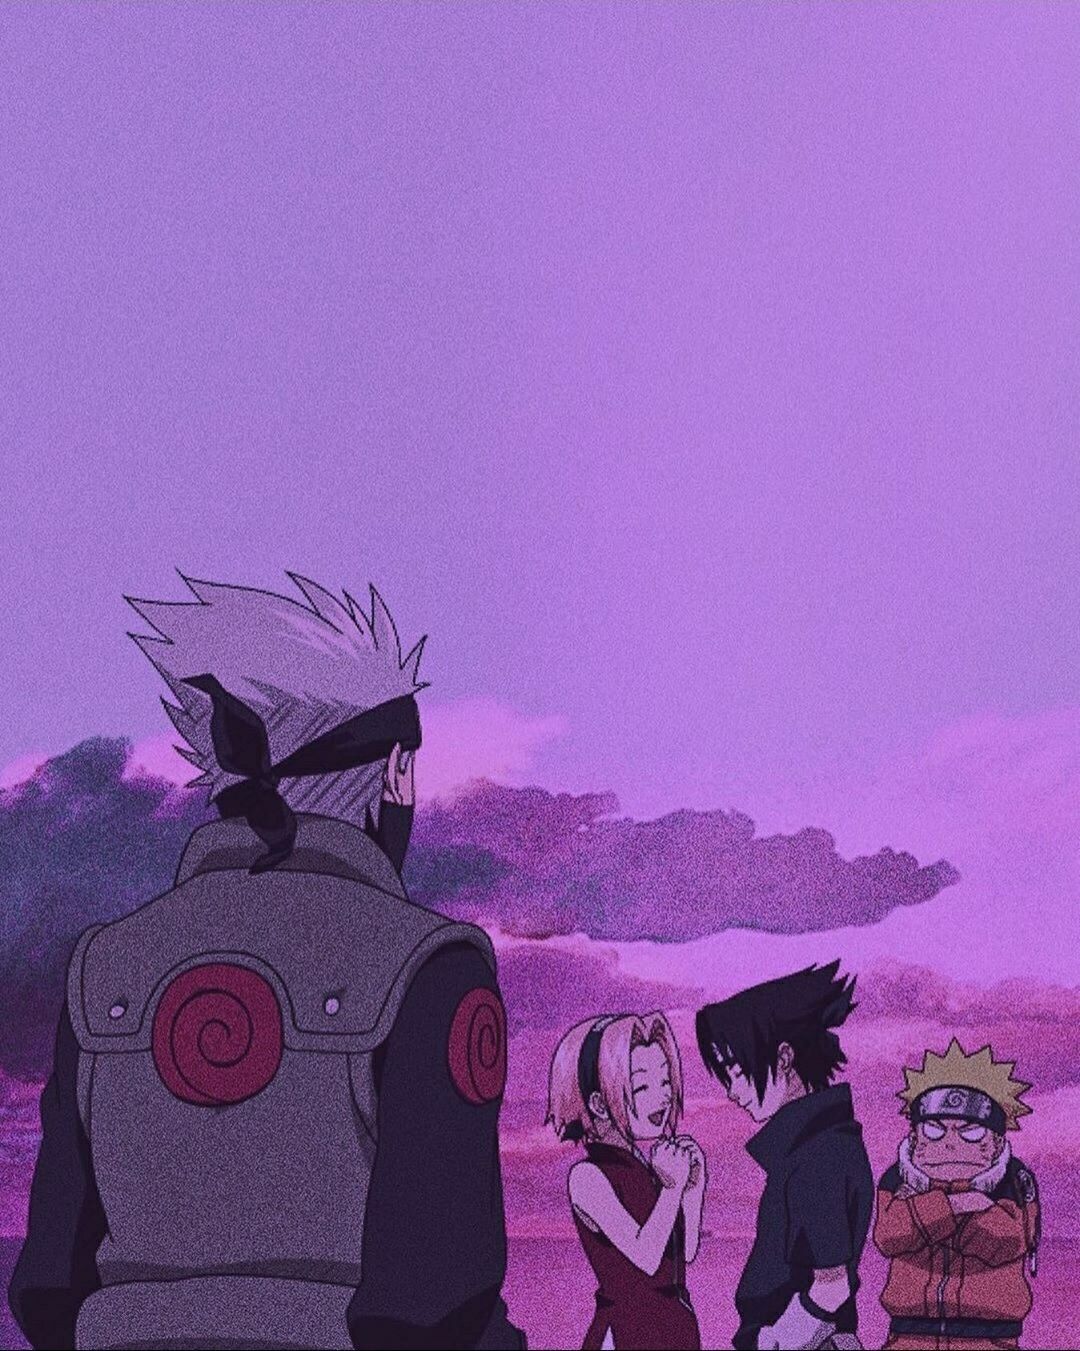 Team 7. Naruto wallpaper, Anime wallpaper, Anime wall art